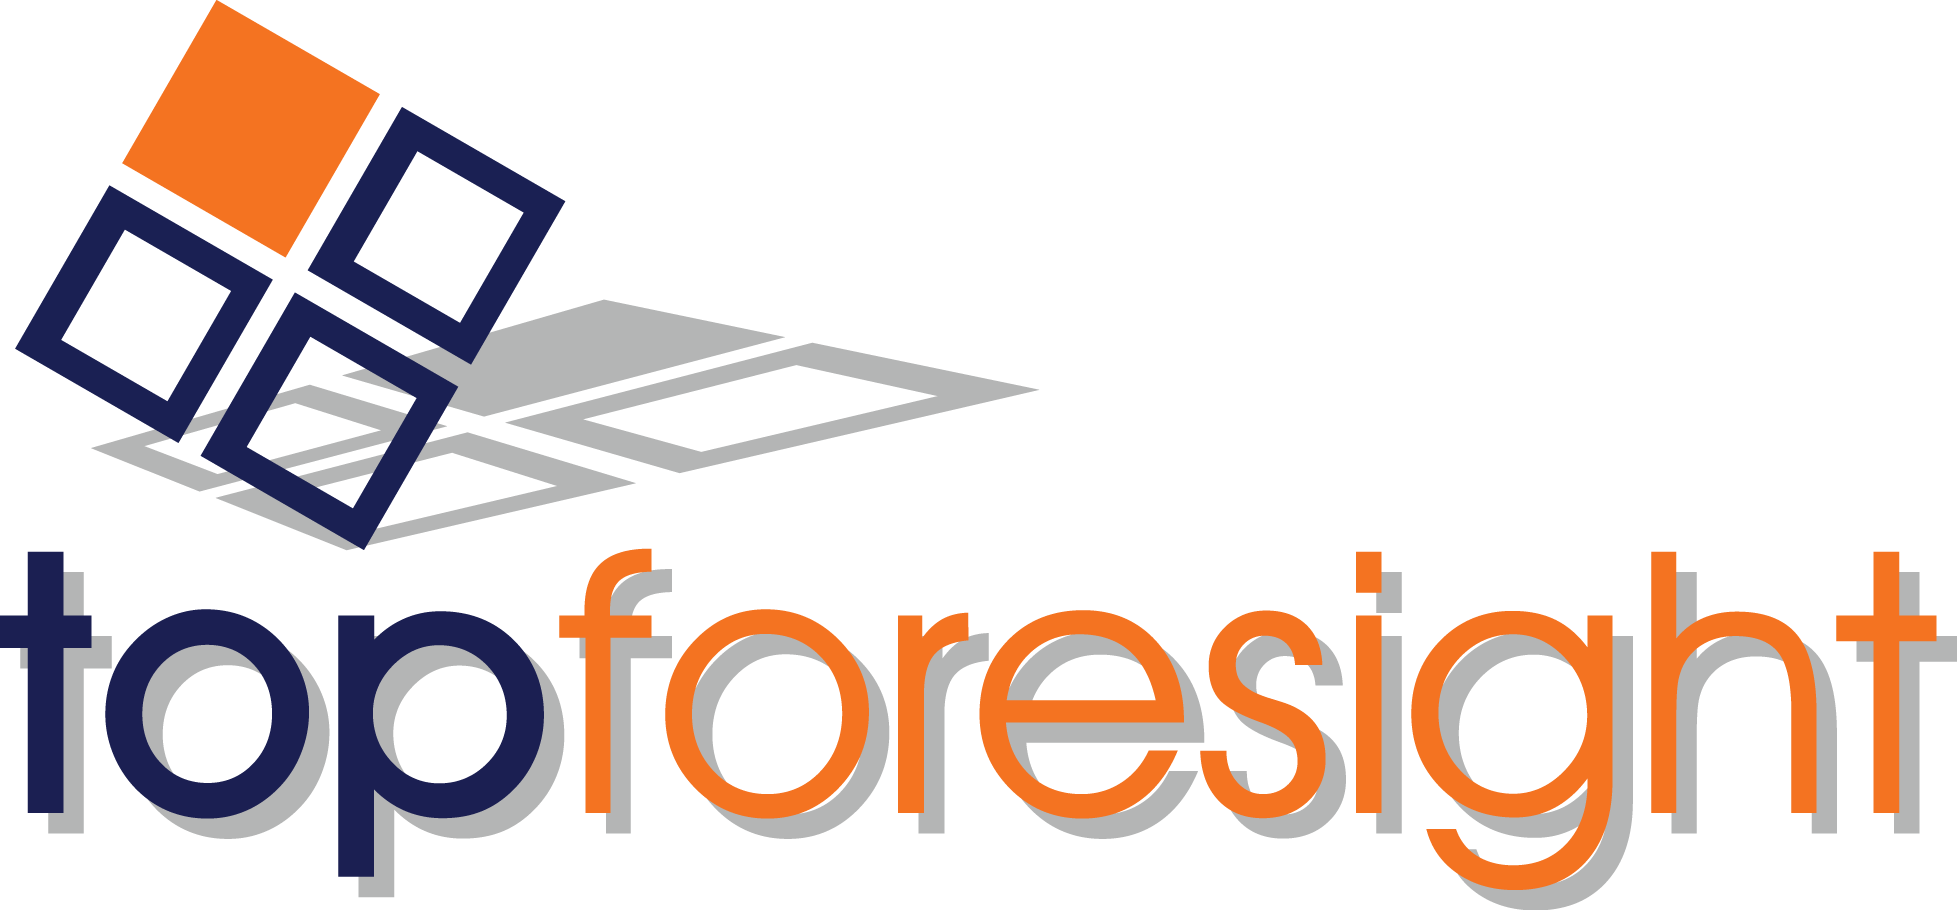 Foresight Logo - Top Foresight Logo